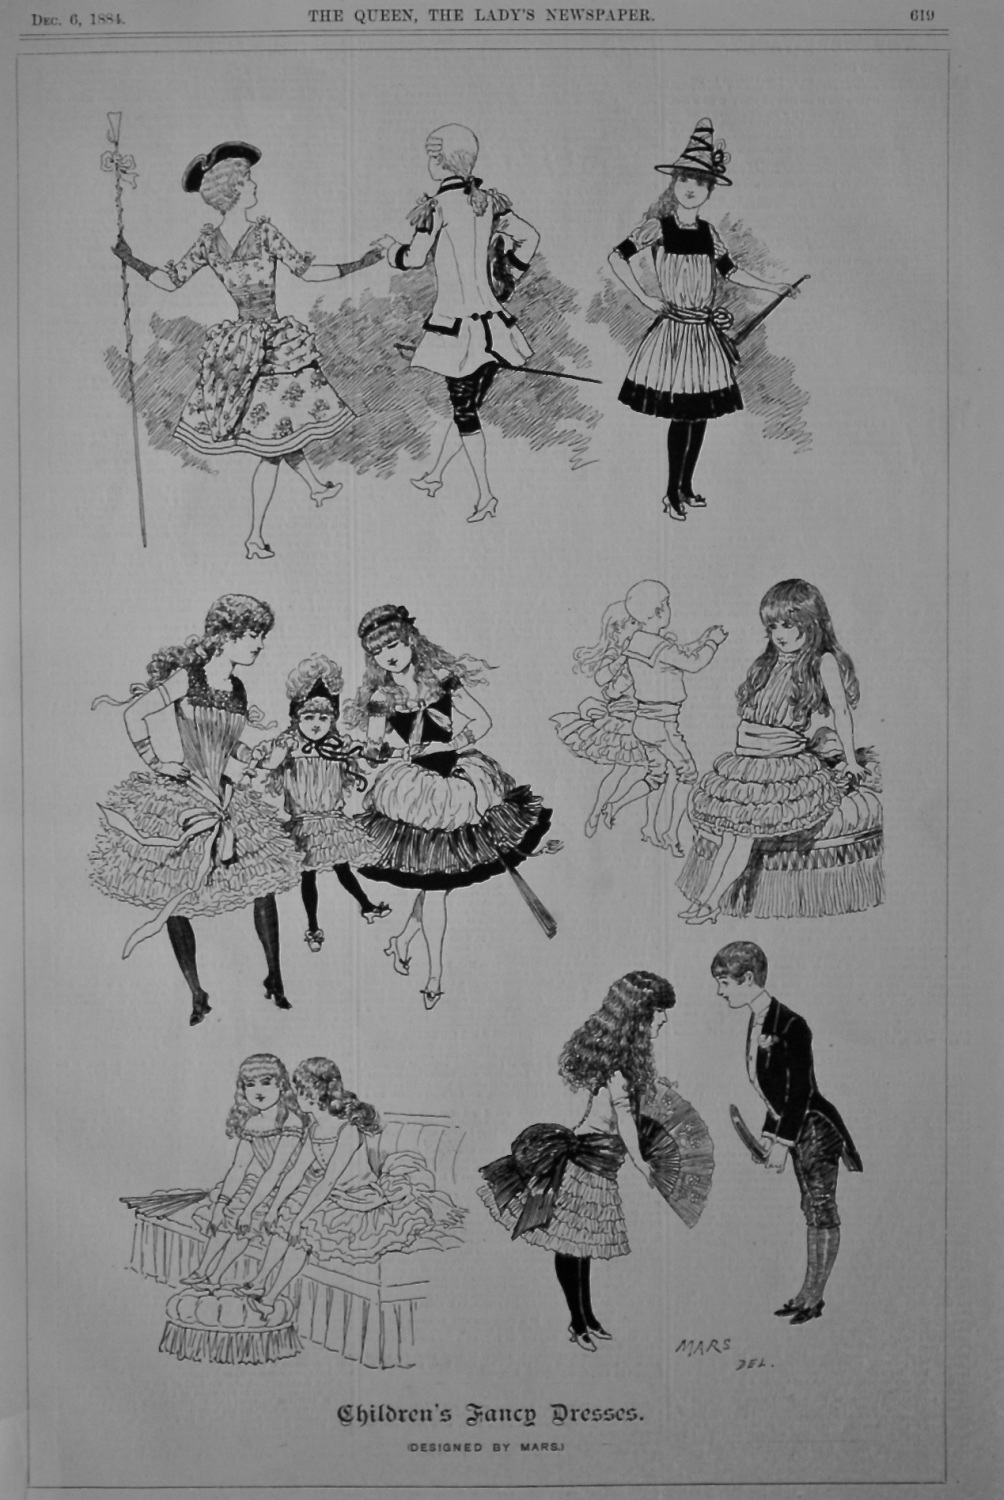 Children's Fancy Dresses. (Designed by MARS.)  1884.